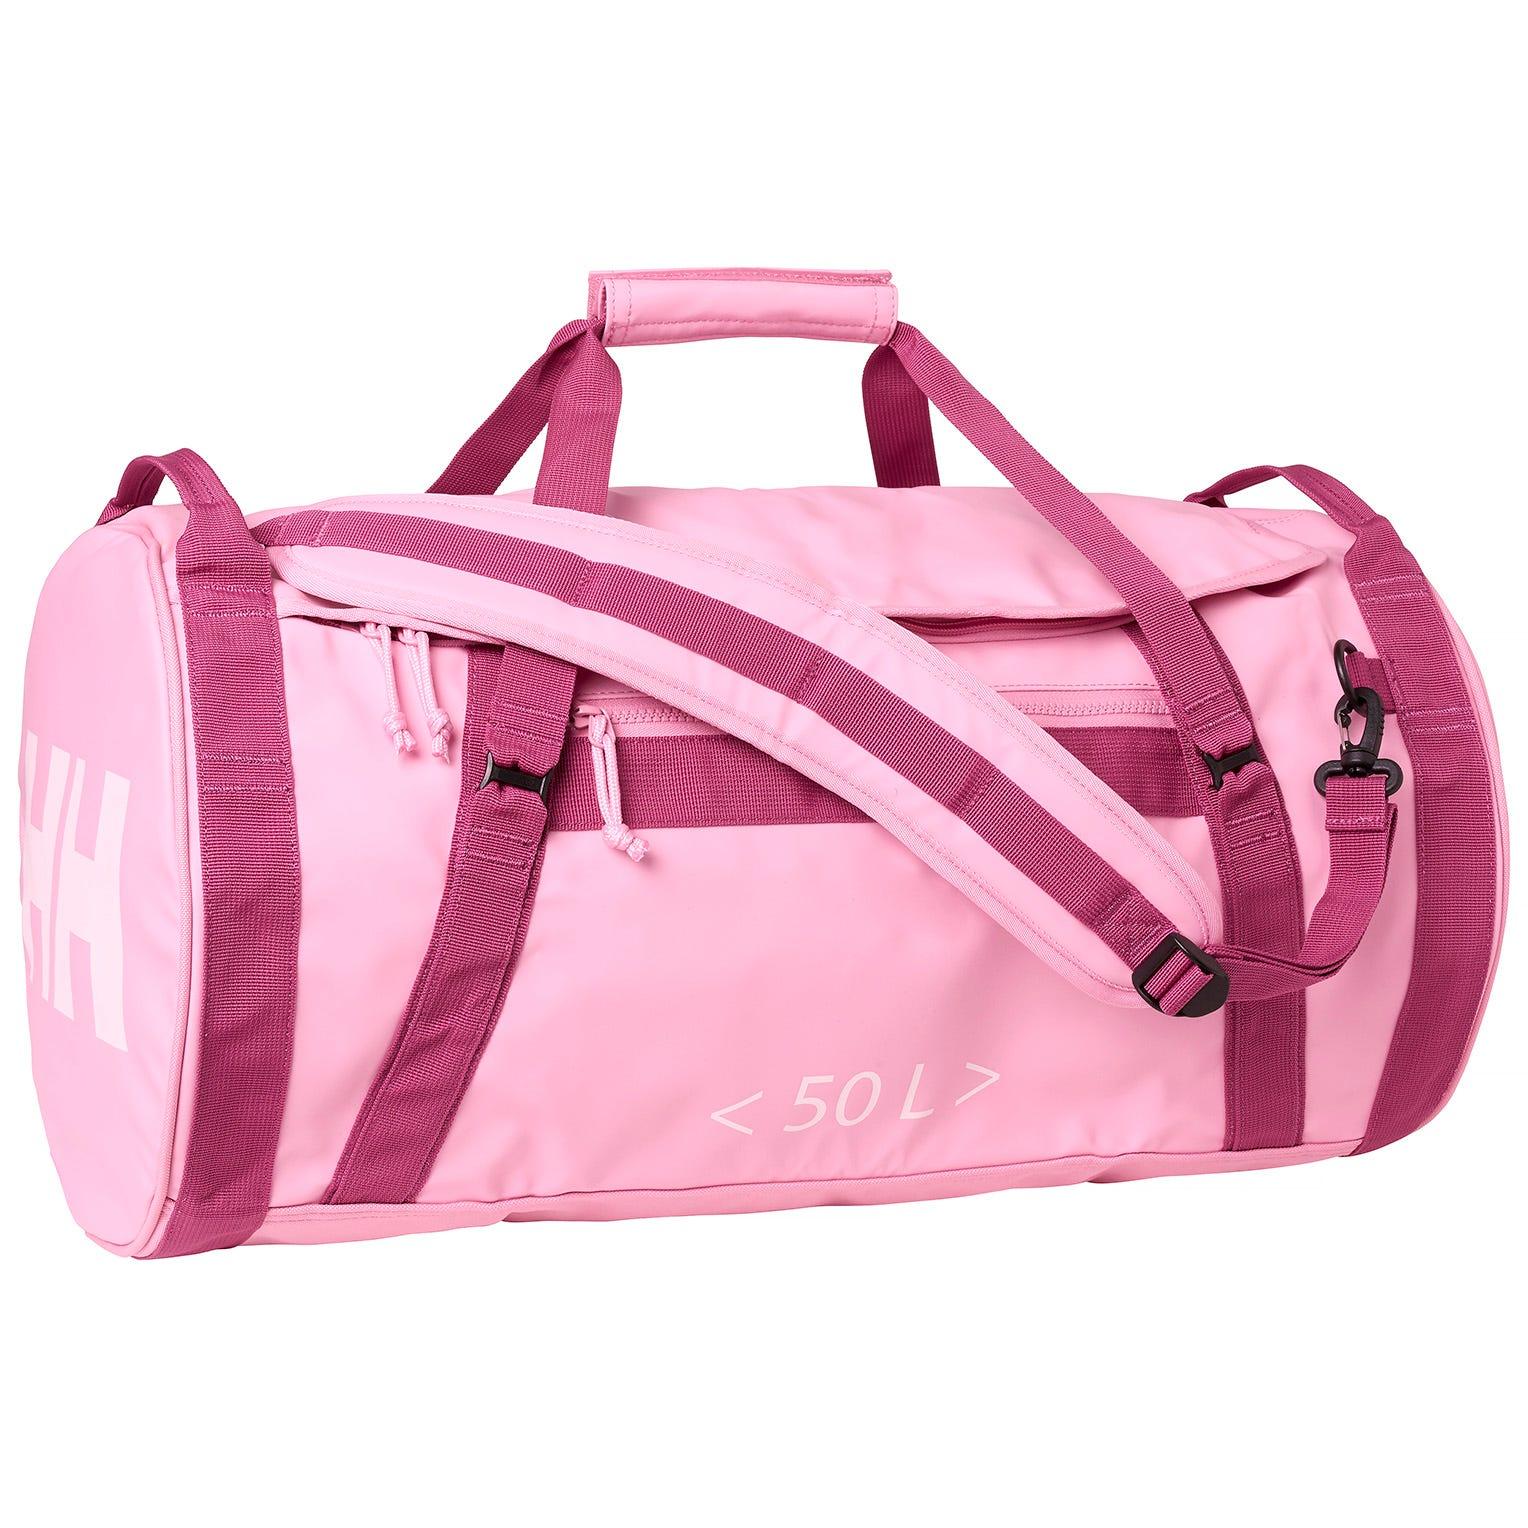 Helly Hansen Hh Duffel Bag 2 30l in Bubblegum p Pink (Pink) - Lyst